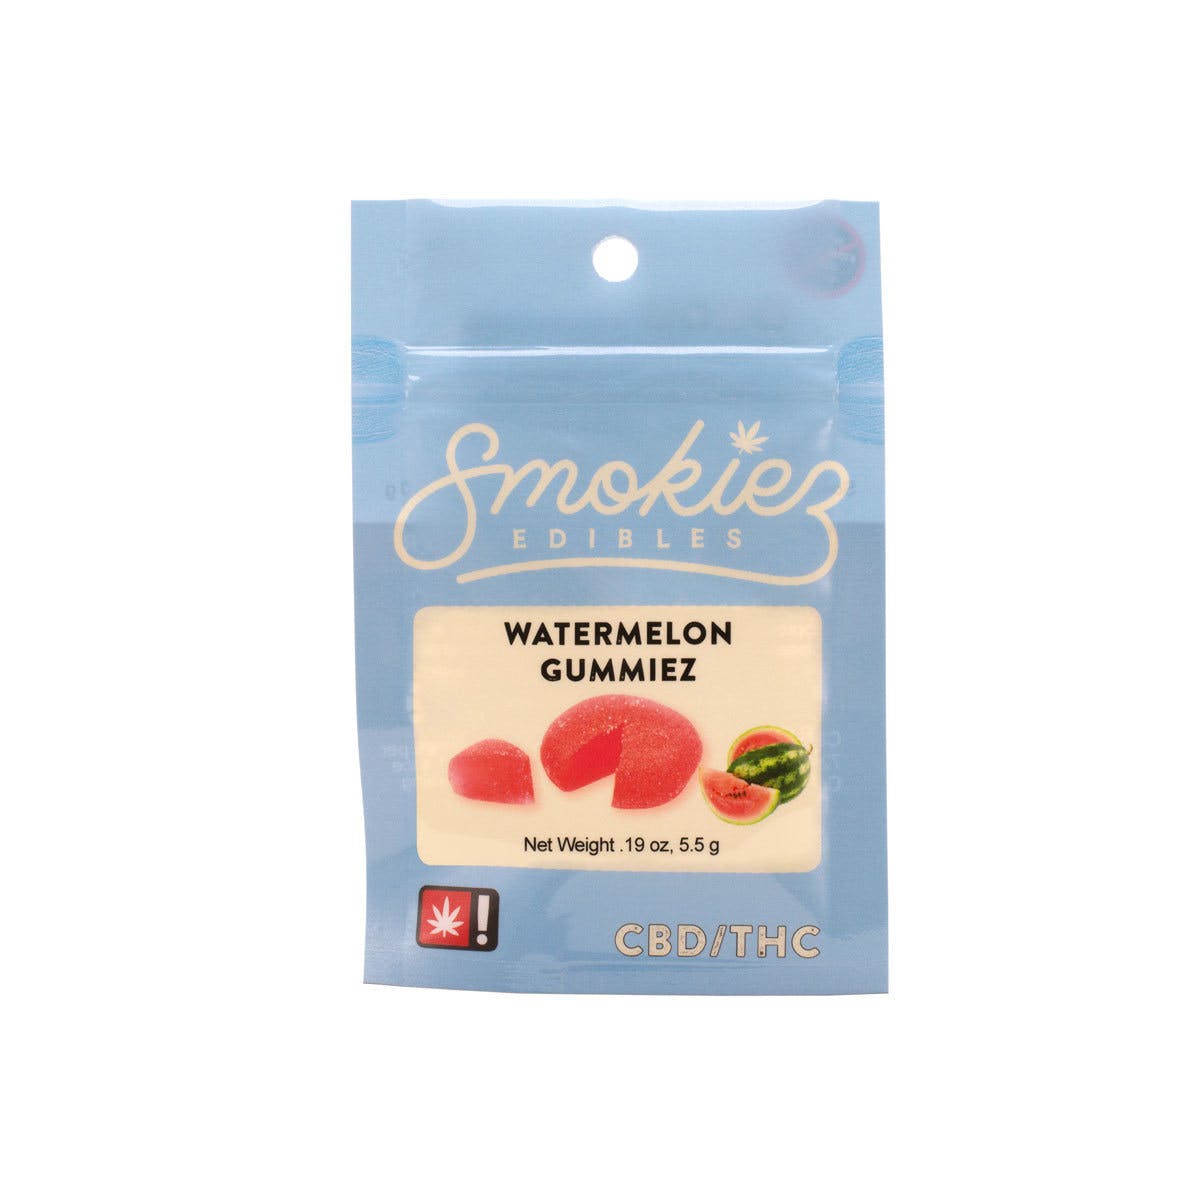 edible-smokiez-edibles-cbdthc-watermelon-gummiez-2c-50mg-2c-10-srv